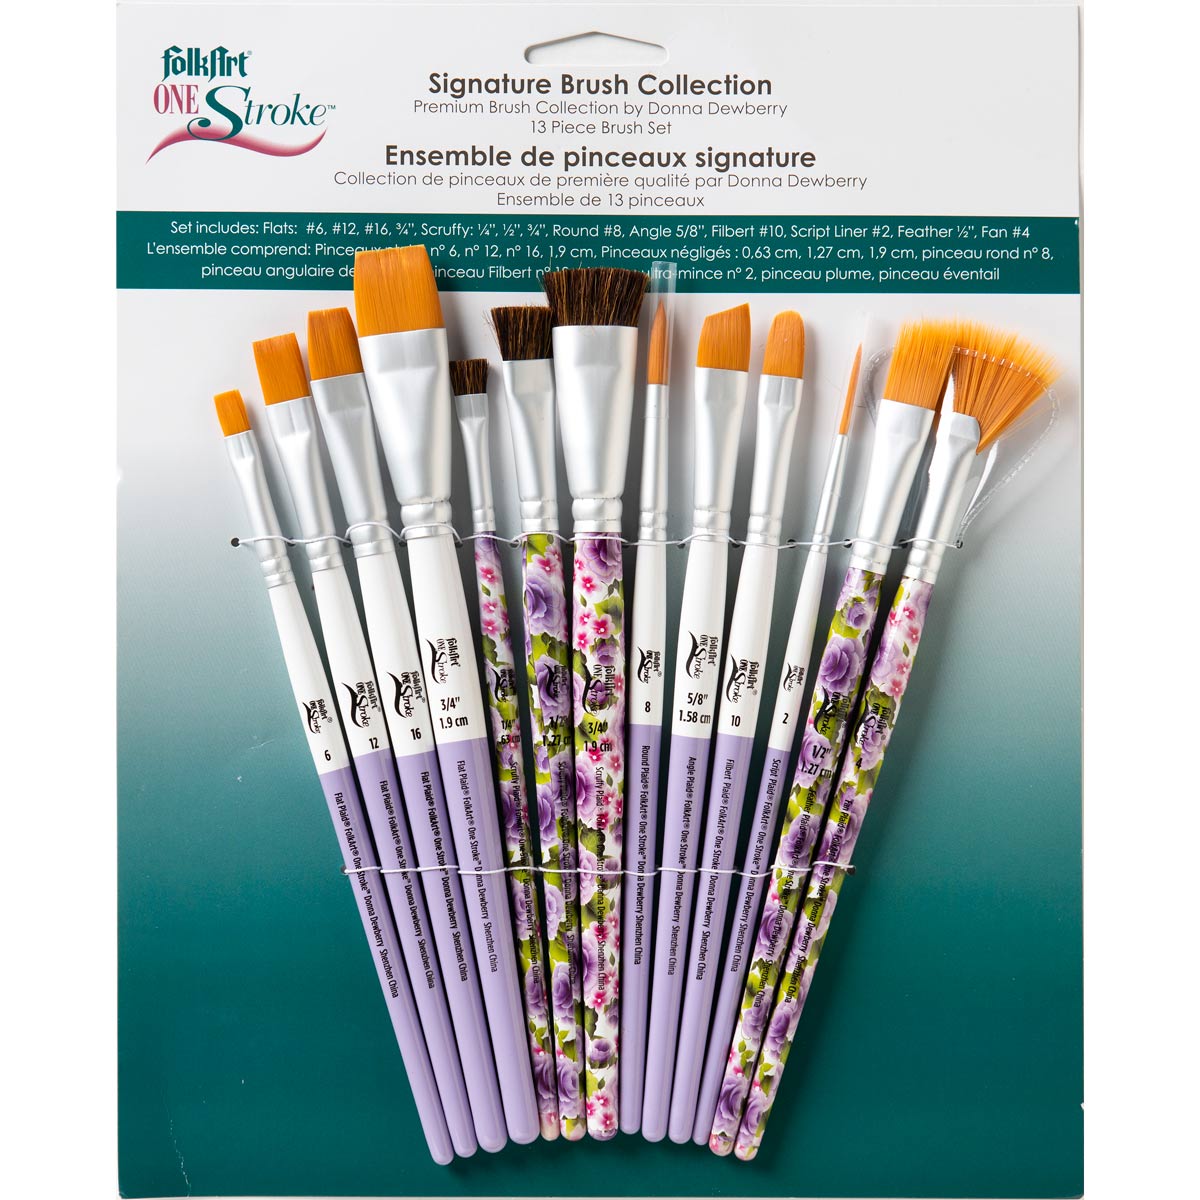 Plaid FolkArt One Stroke Brushes-For Glass & Ceramics Painting Value Pack #4160 